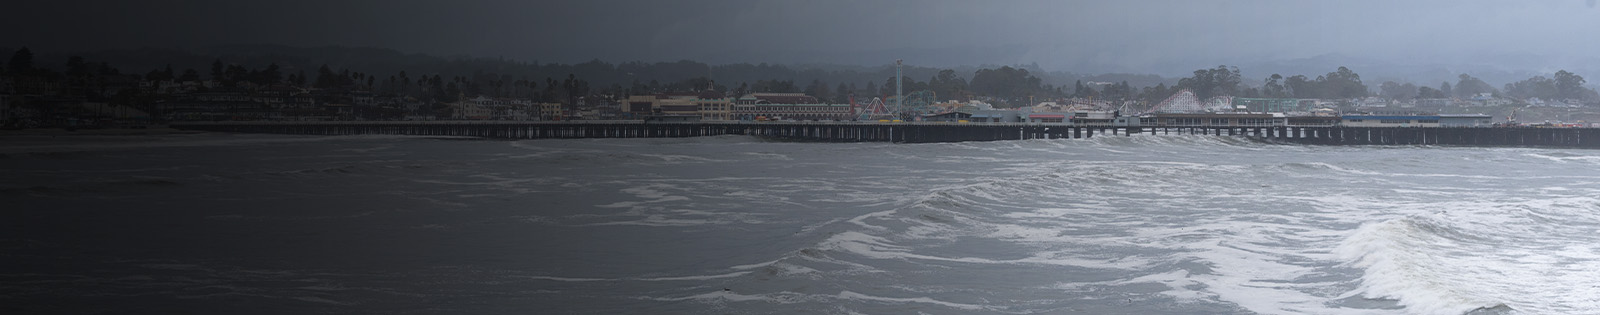 Ocean waves during severe storm in California.